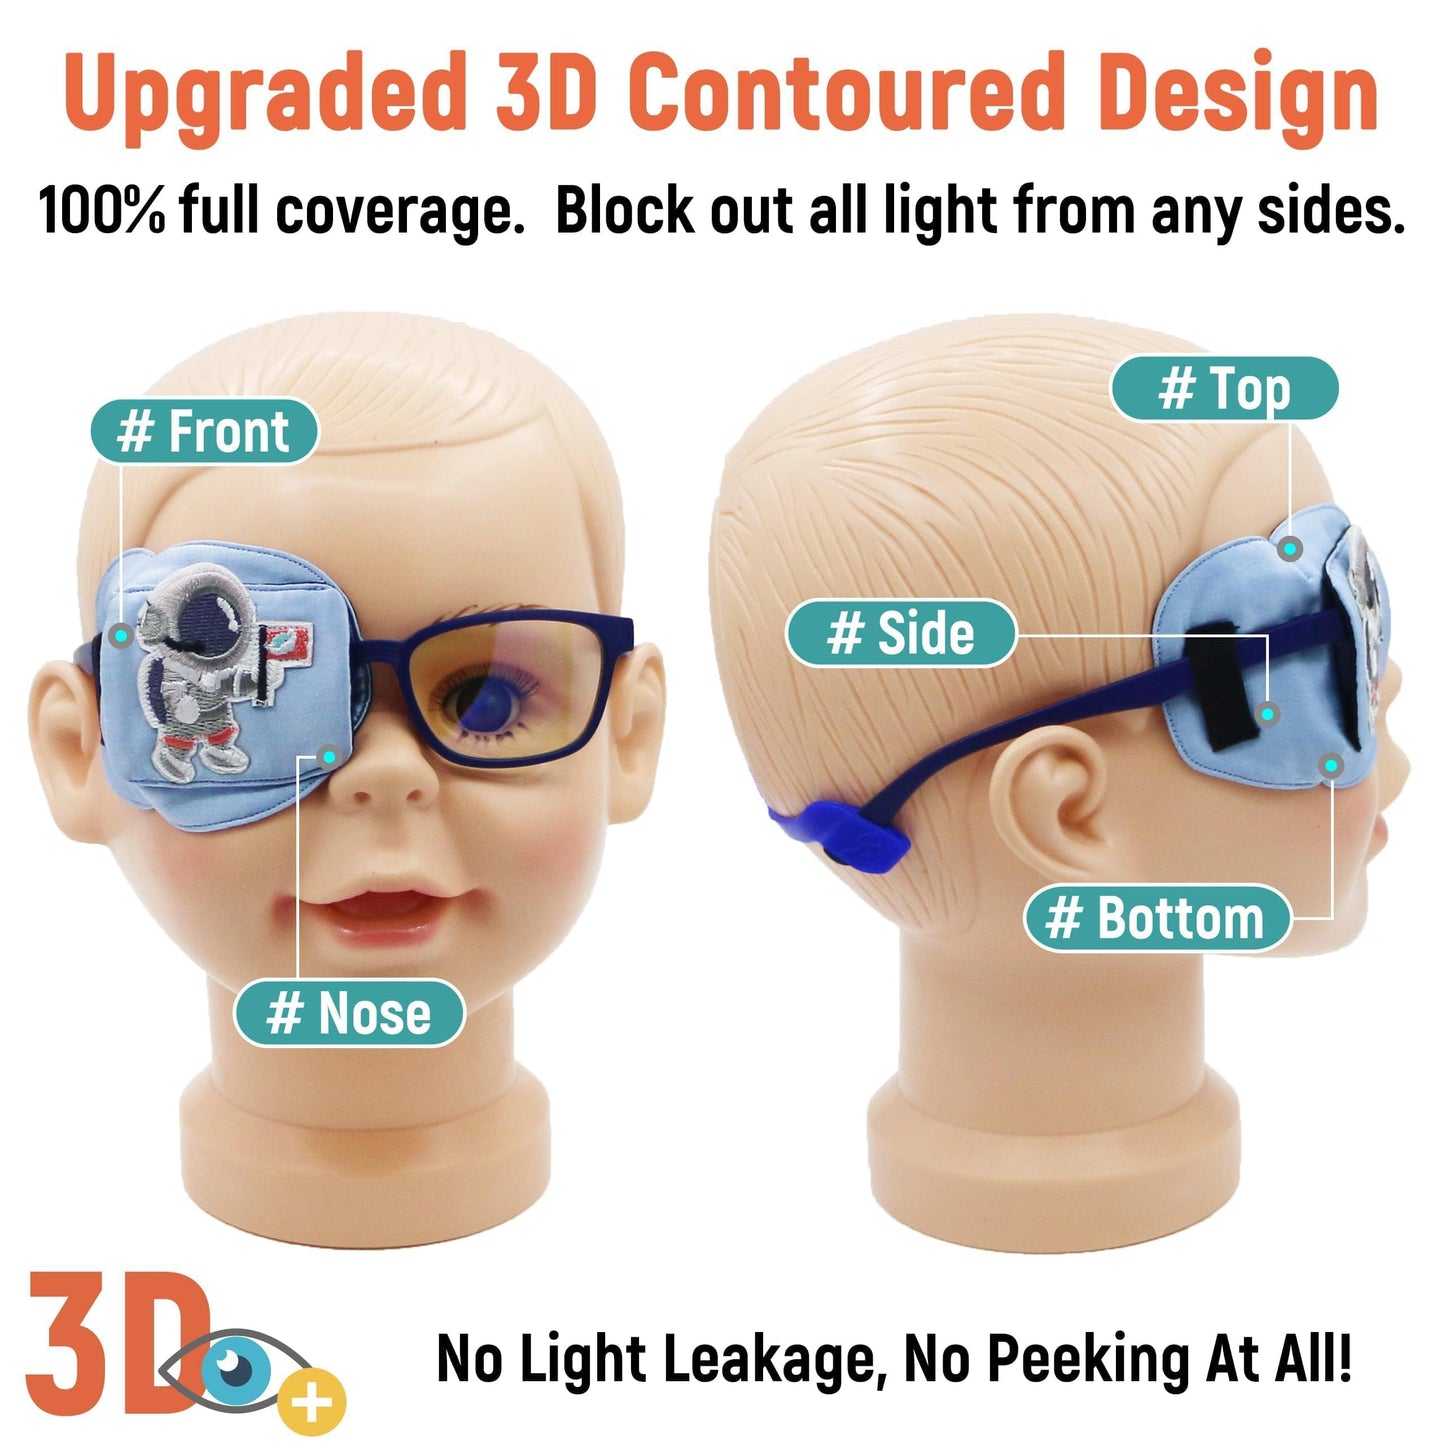 3D Silk Eye Patch for Kids Boys Glasses (Blue Astronaut, Right Eye)